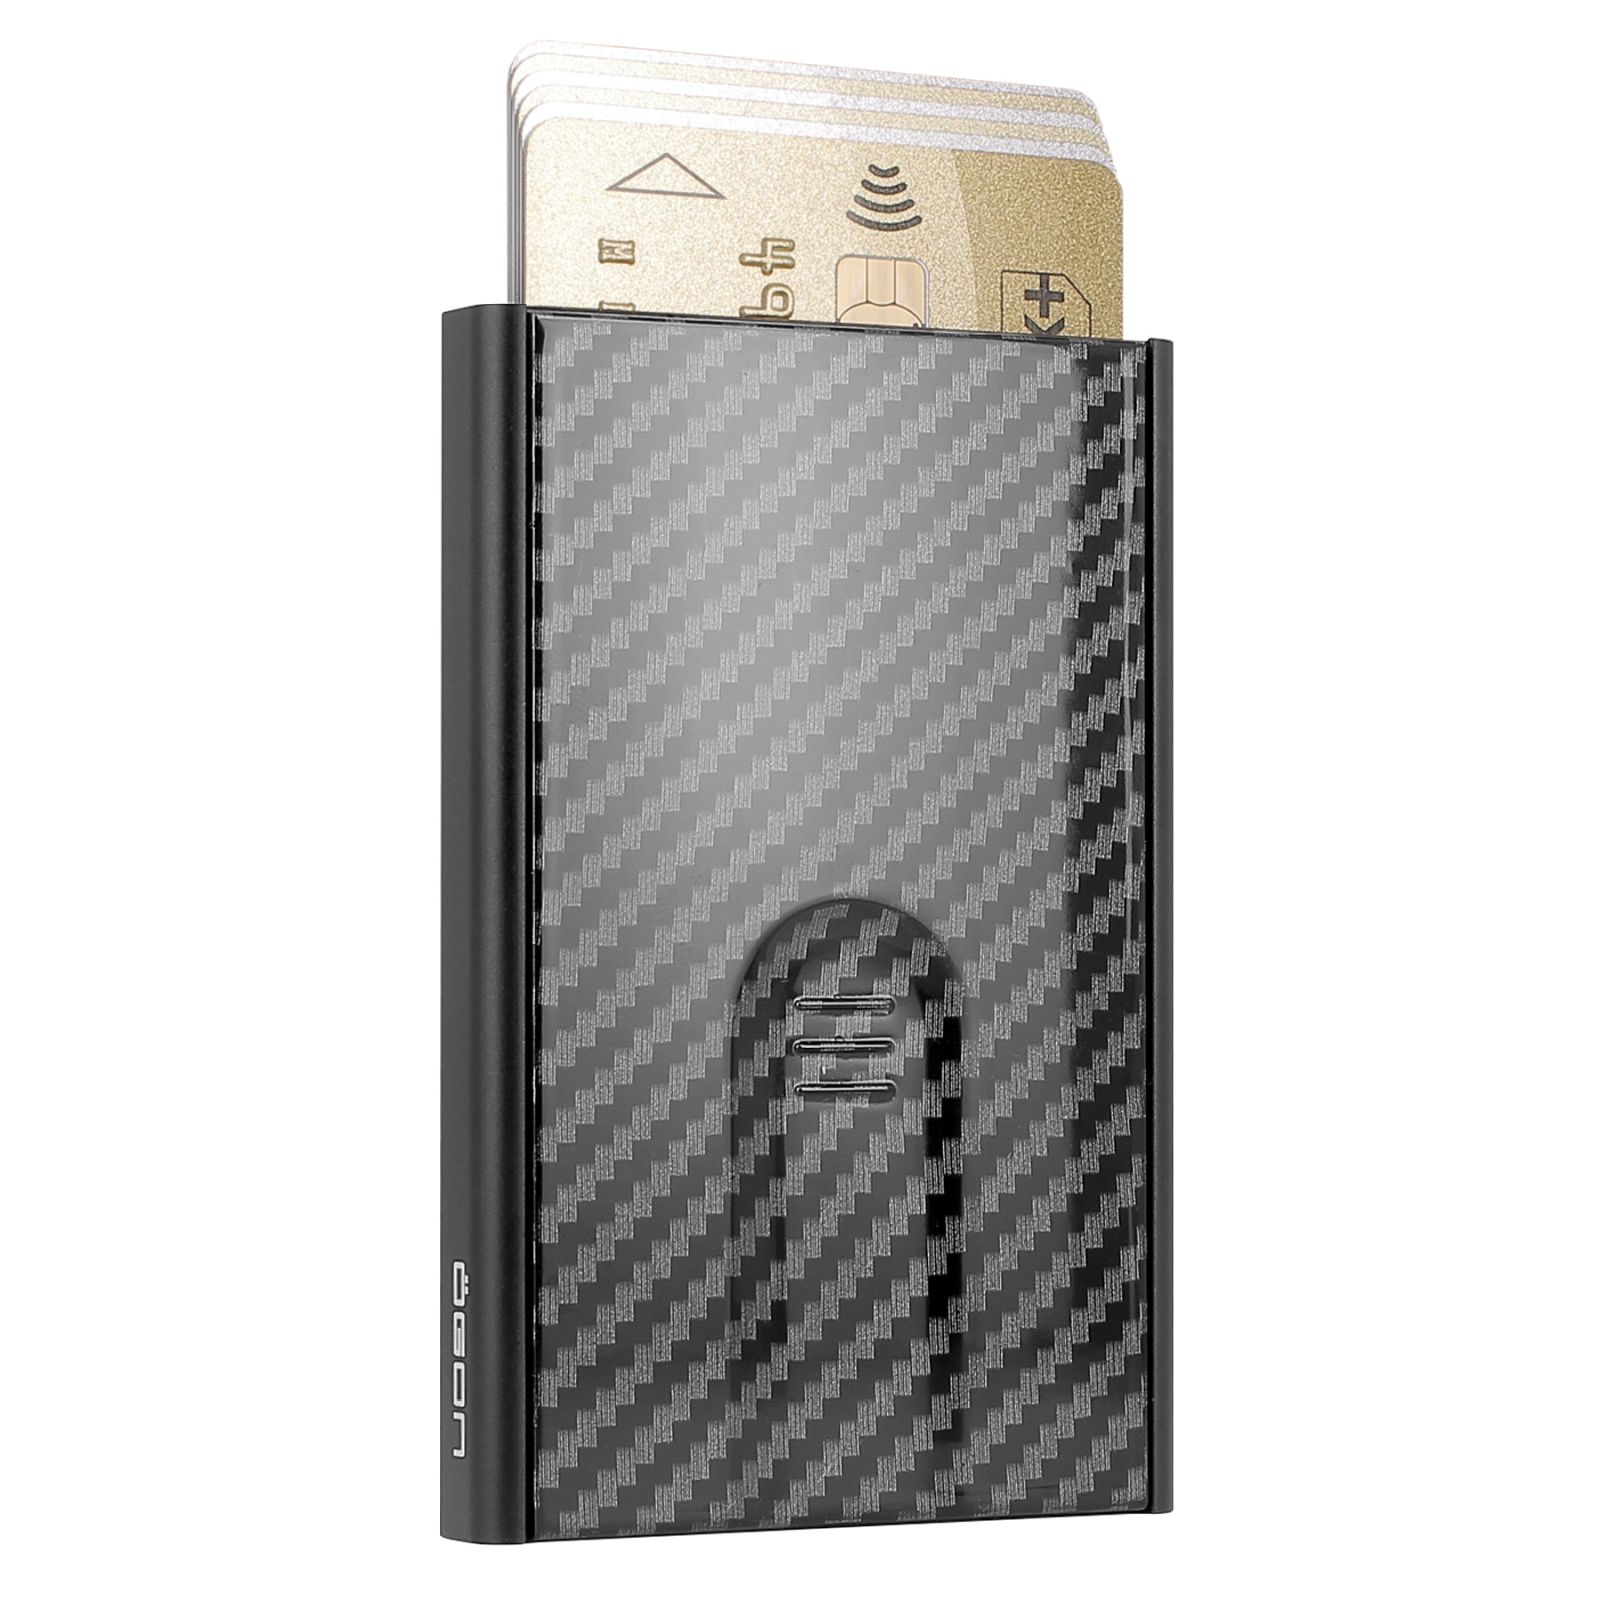 OGON Slider Aluminum Wallet - Carbon Fiber